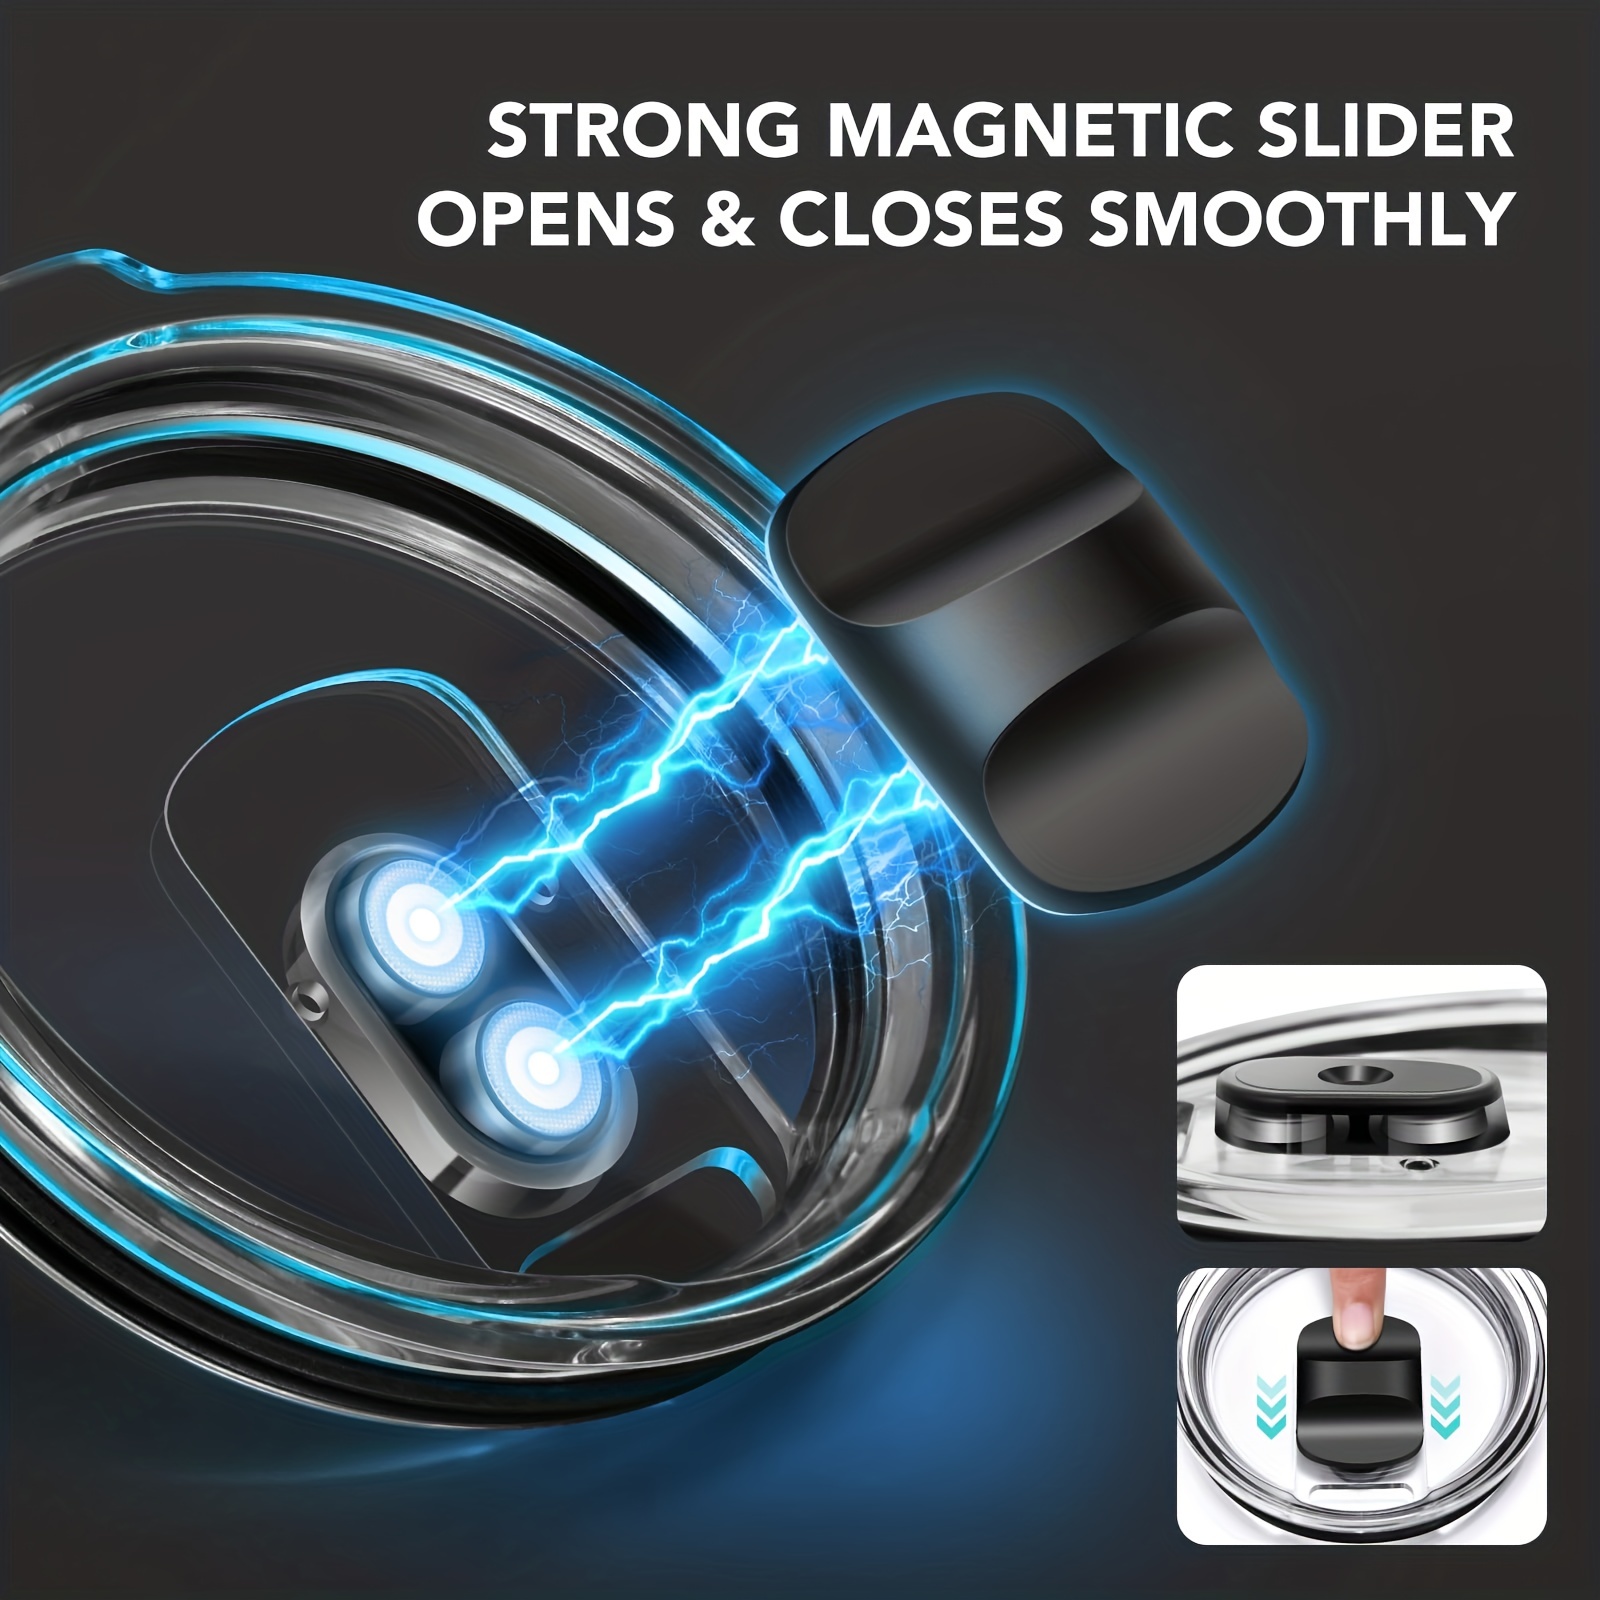 20 oz Tumbler with Magnetic Slider Lid